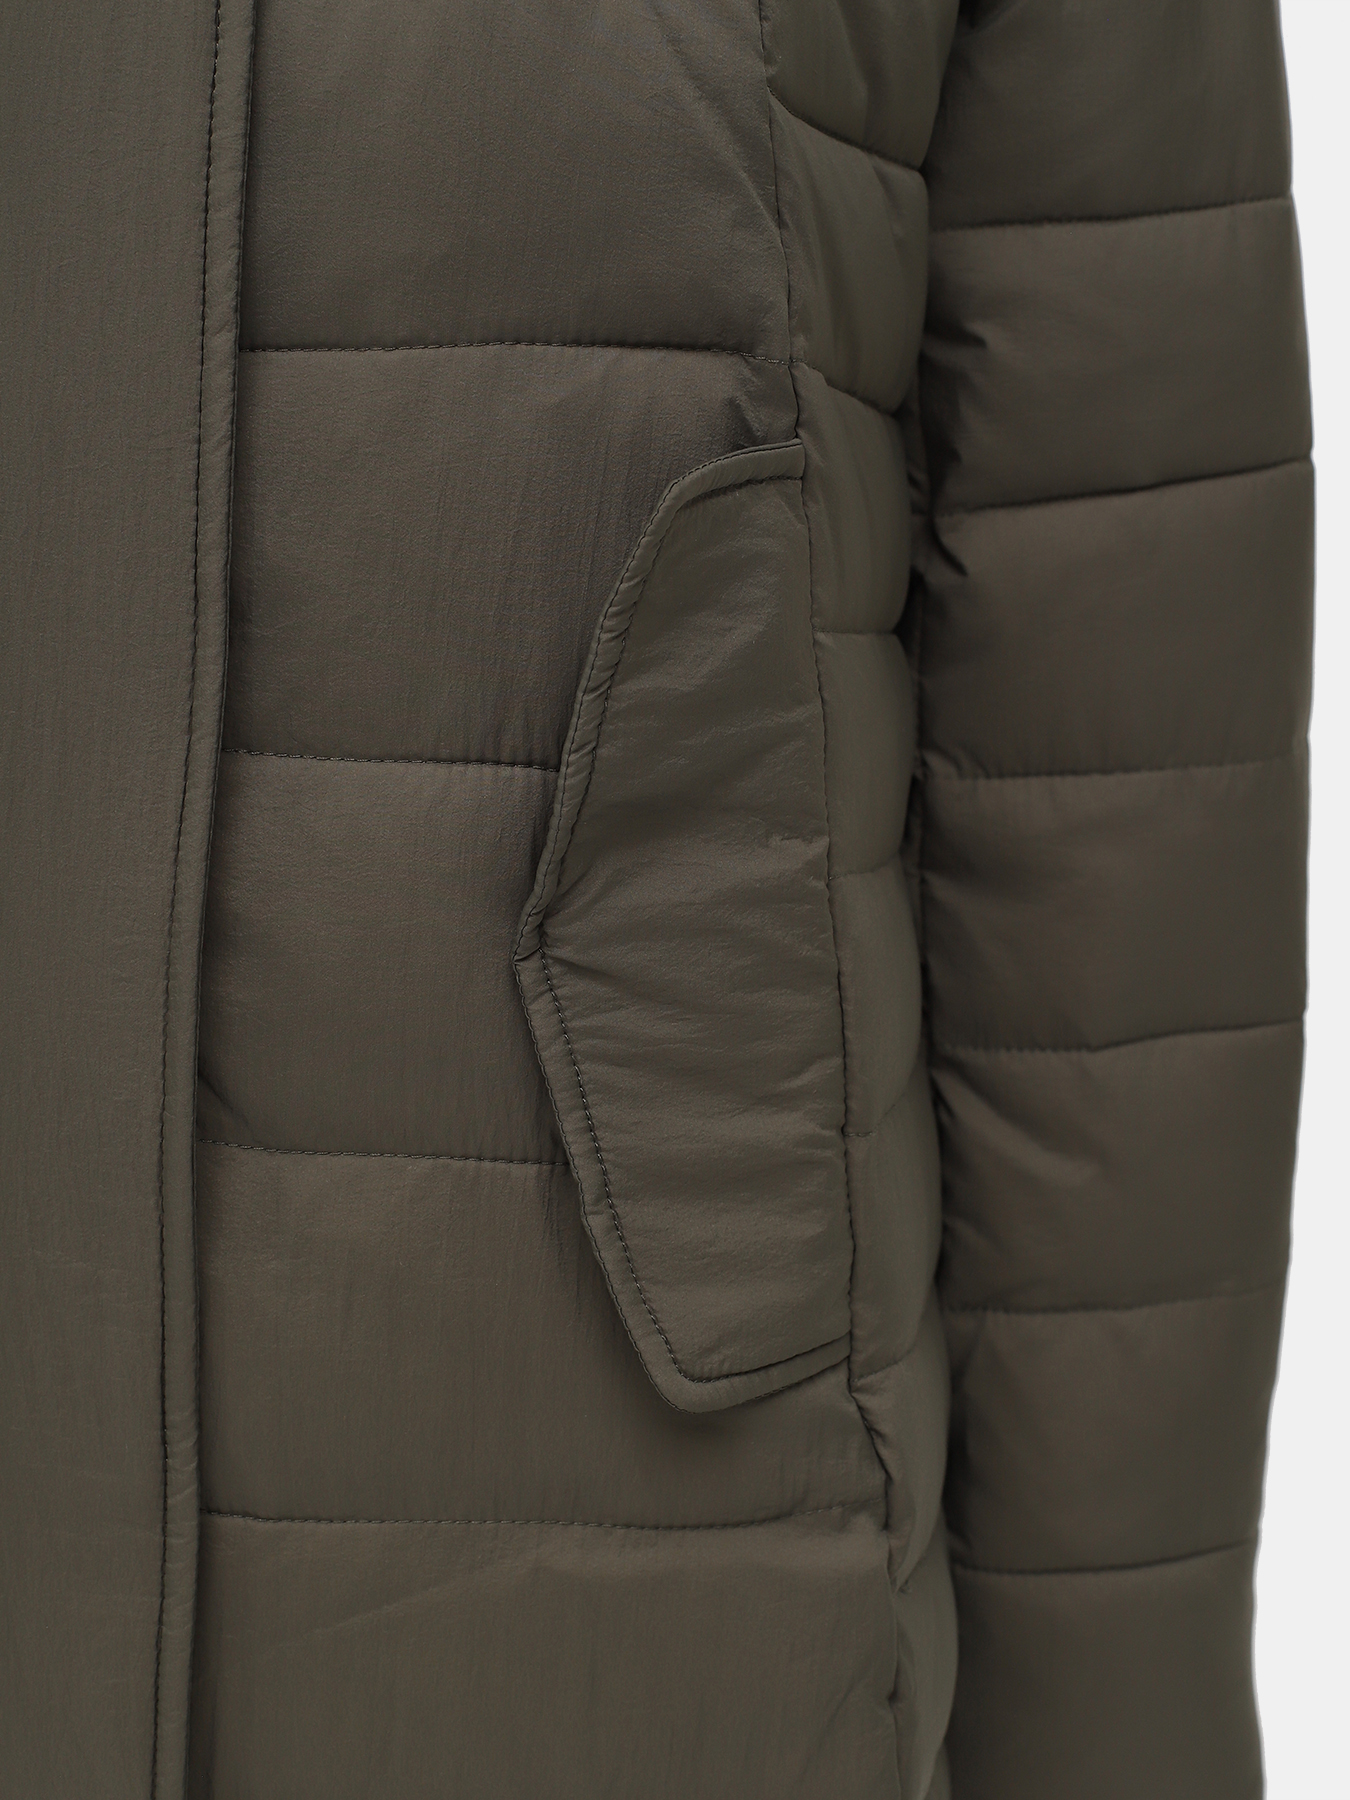 Пальто зимнее Alessandro Manzoni Purpur 384502-241, цвет хаки, размер 46-48 - фото 4